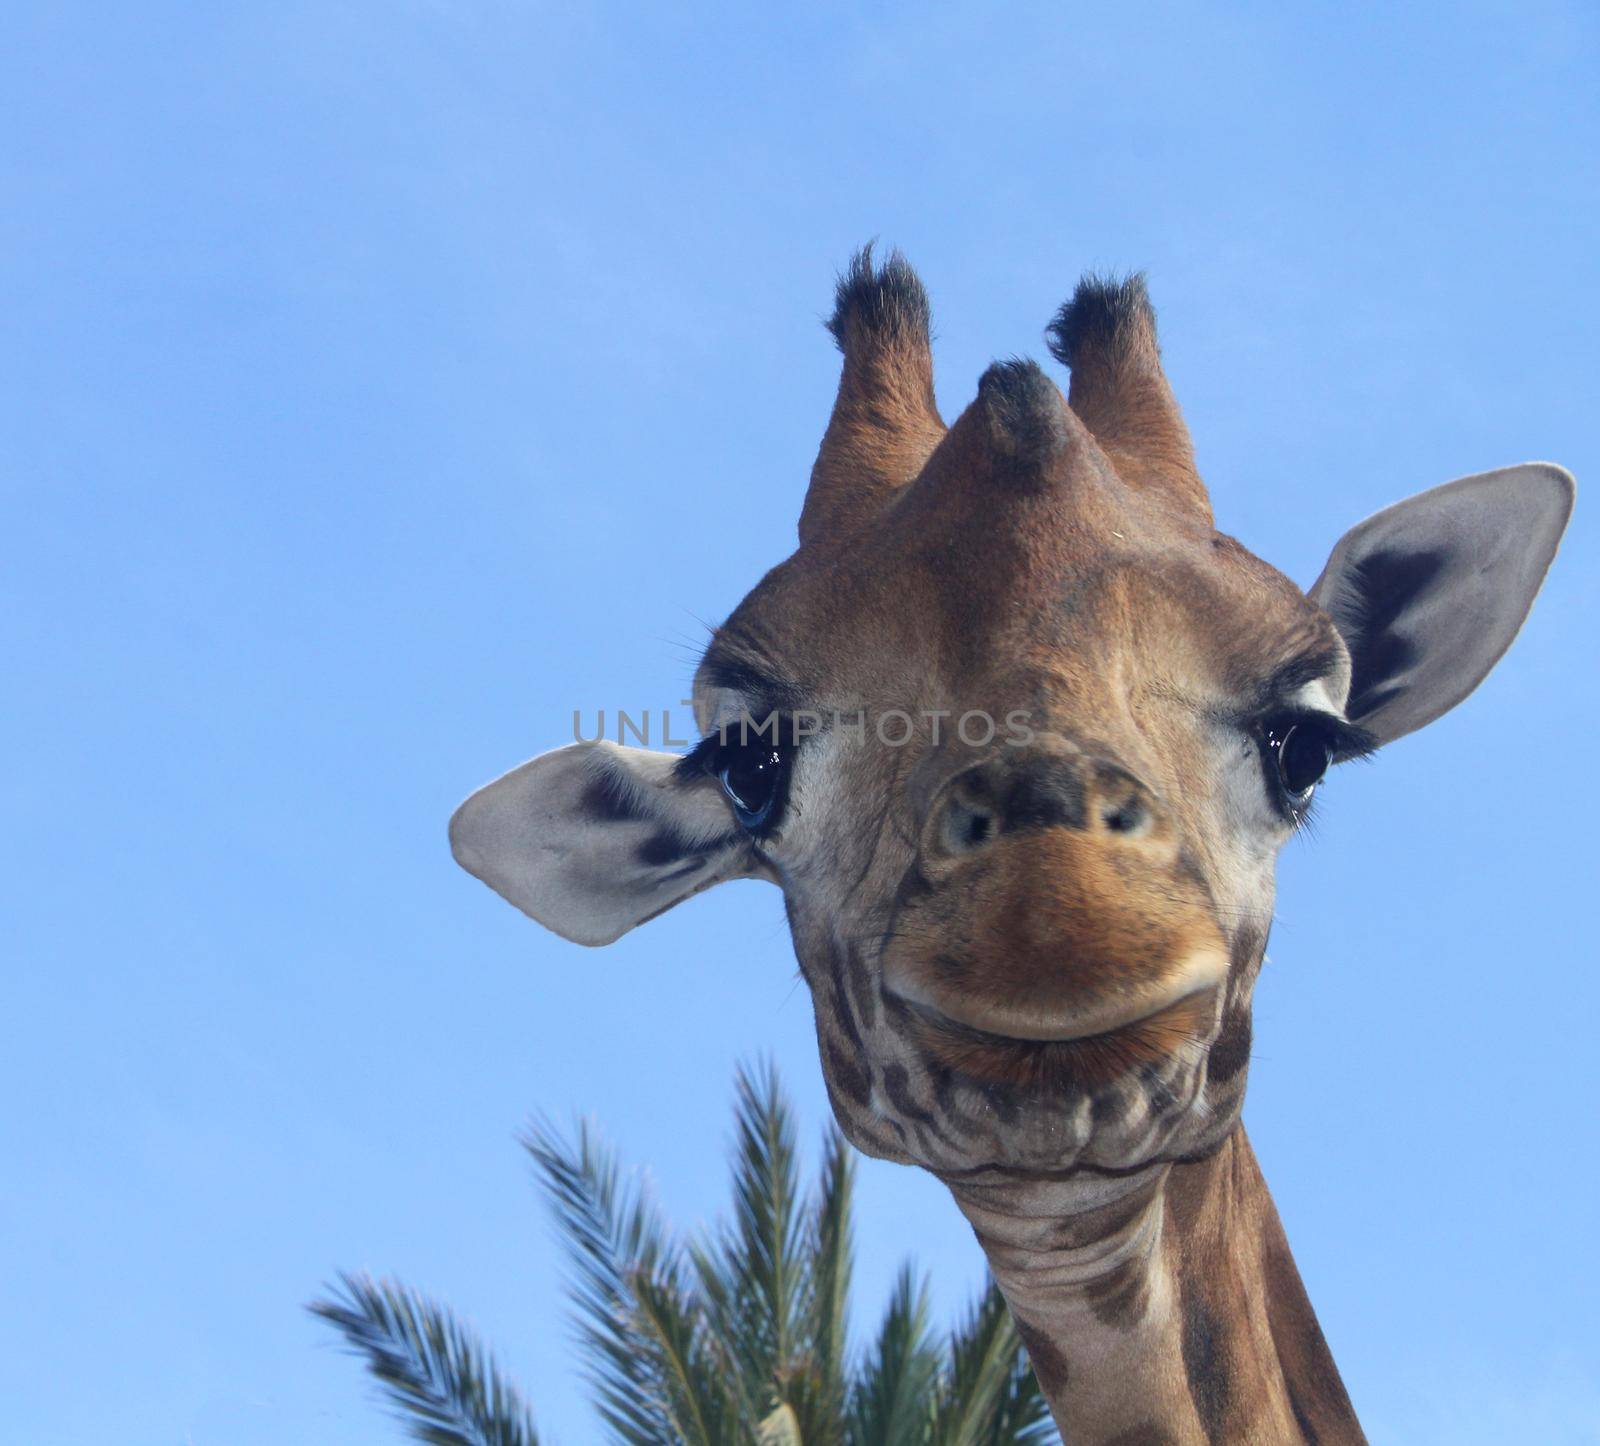 Portrait of a giraffe against a blue sky by JackyBrown